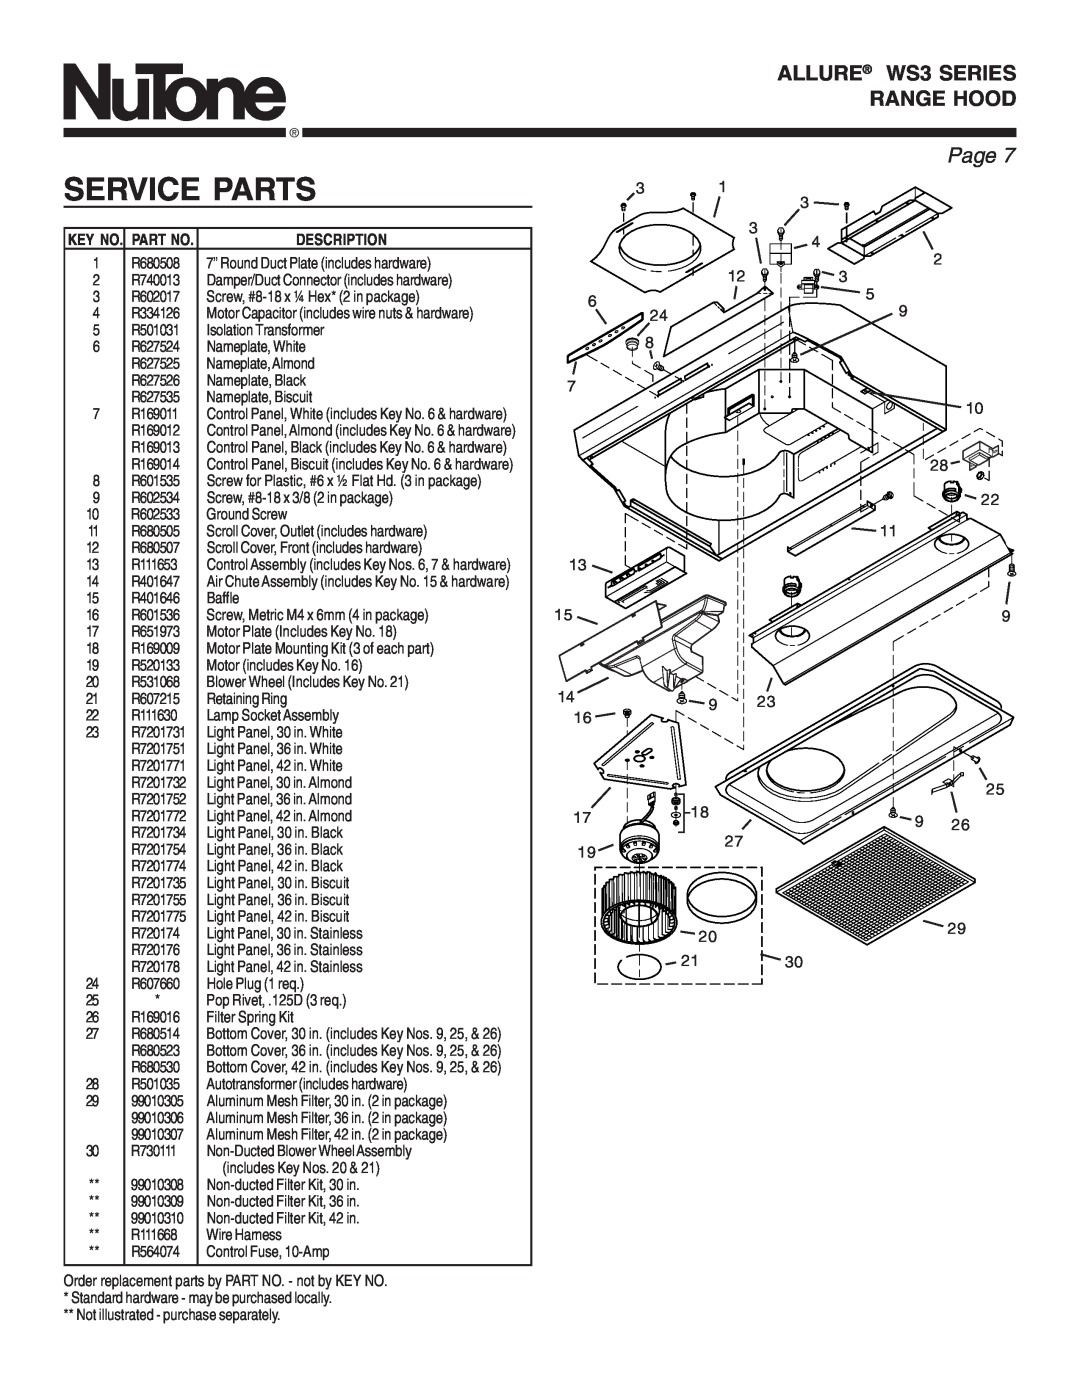 NuTone manual Service Parts, Key No. Part No, ALLURE WS3 SERIES RANGE HOOD, Page 